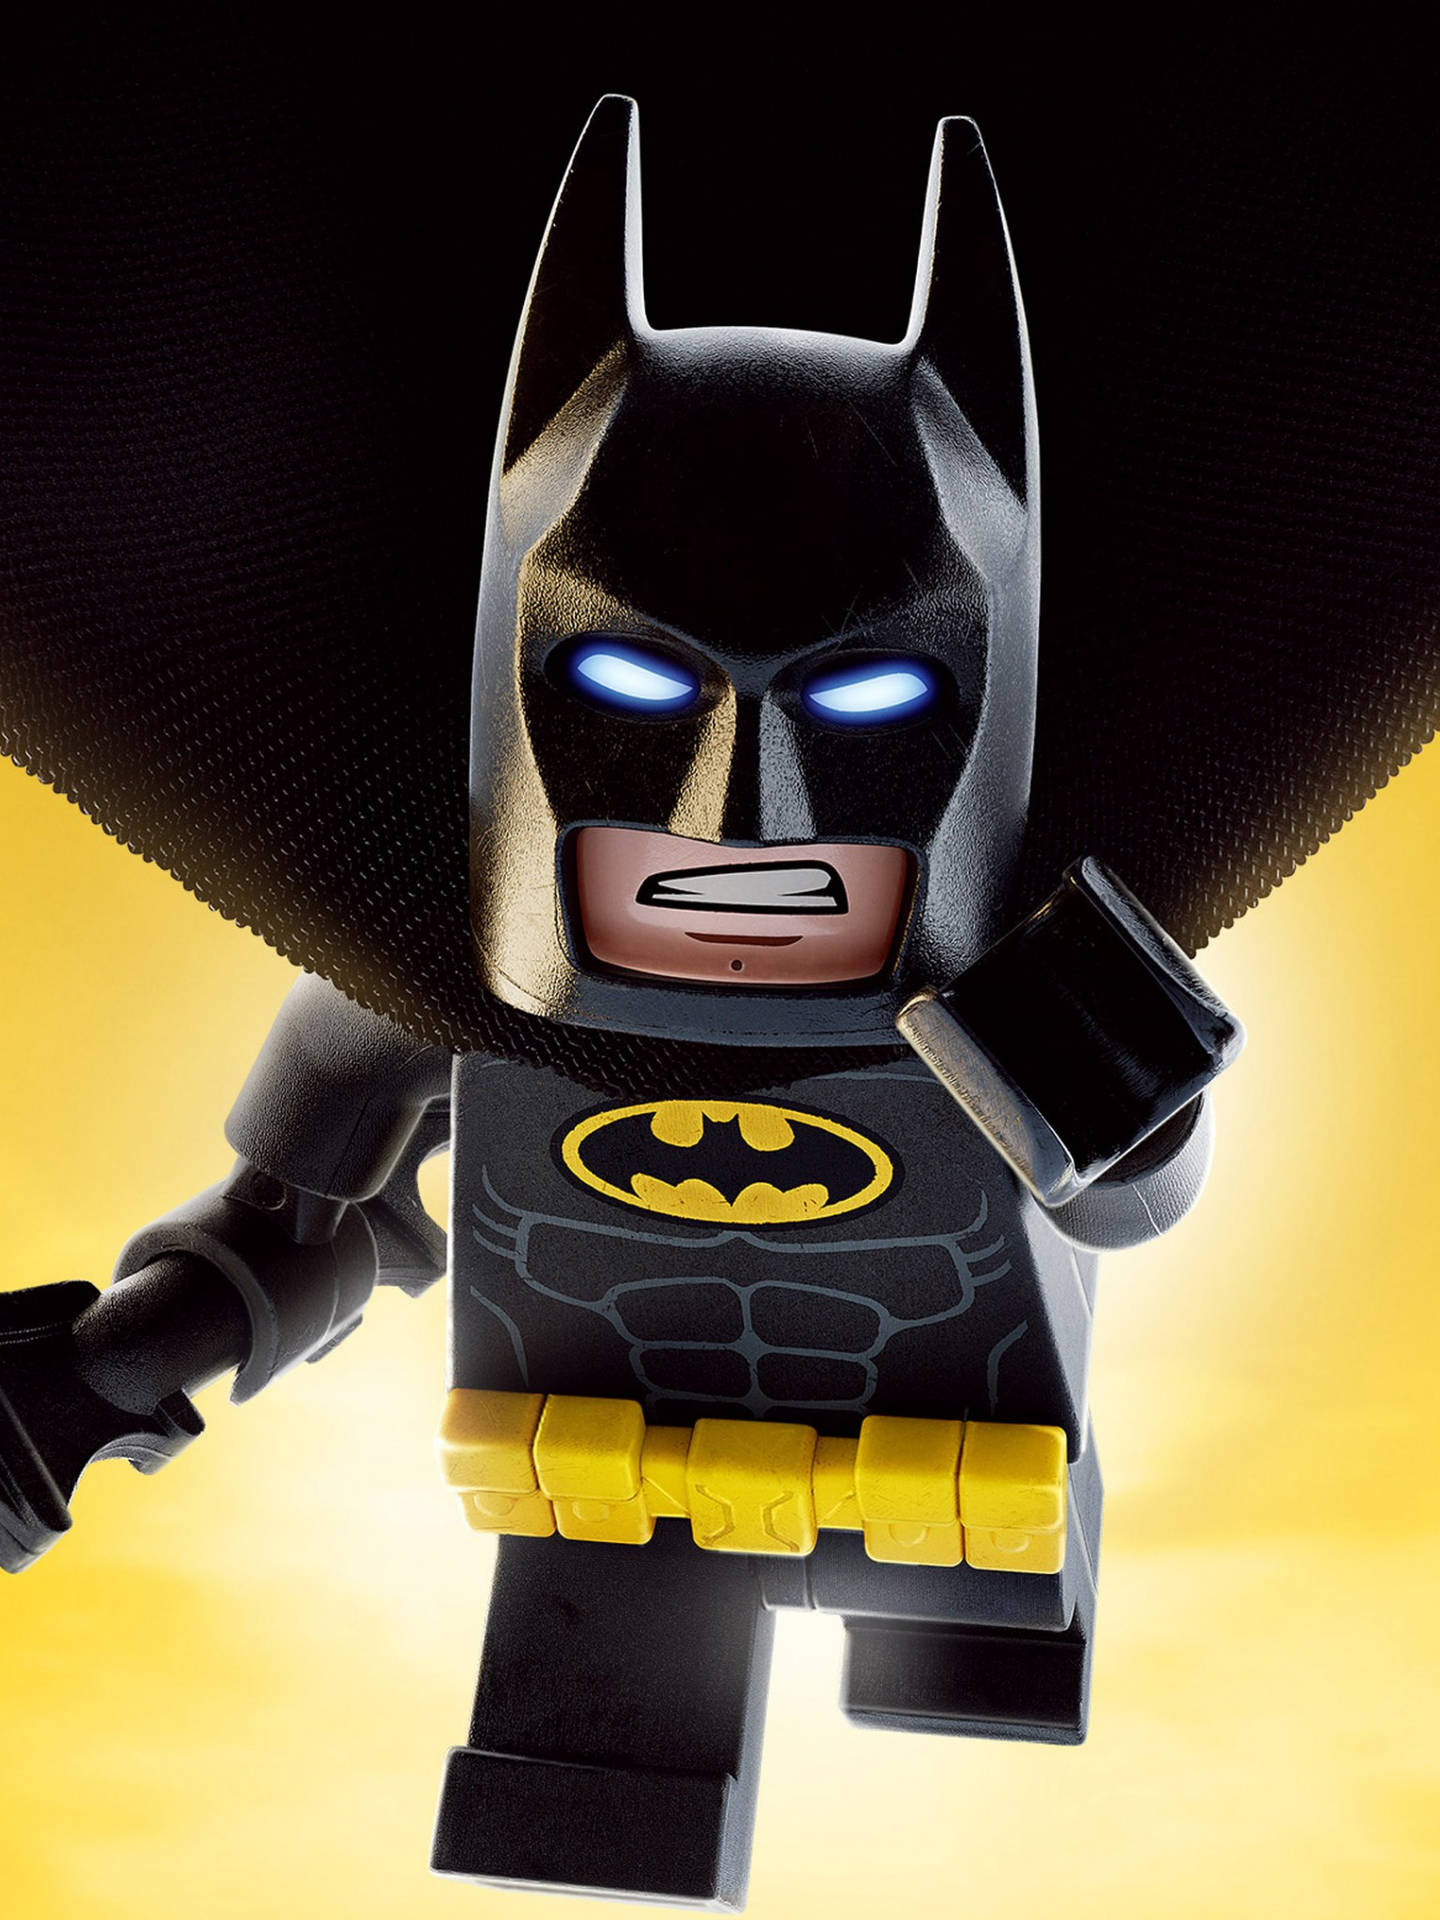 Download Bruce Wayne From The Lego Batman Movie Wallpaper 